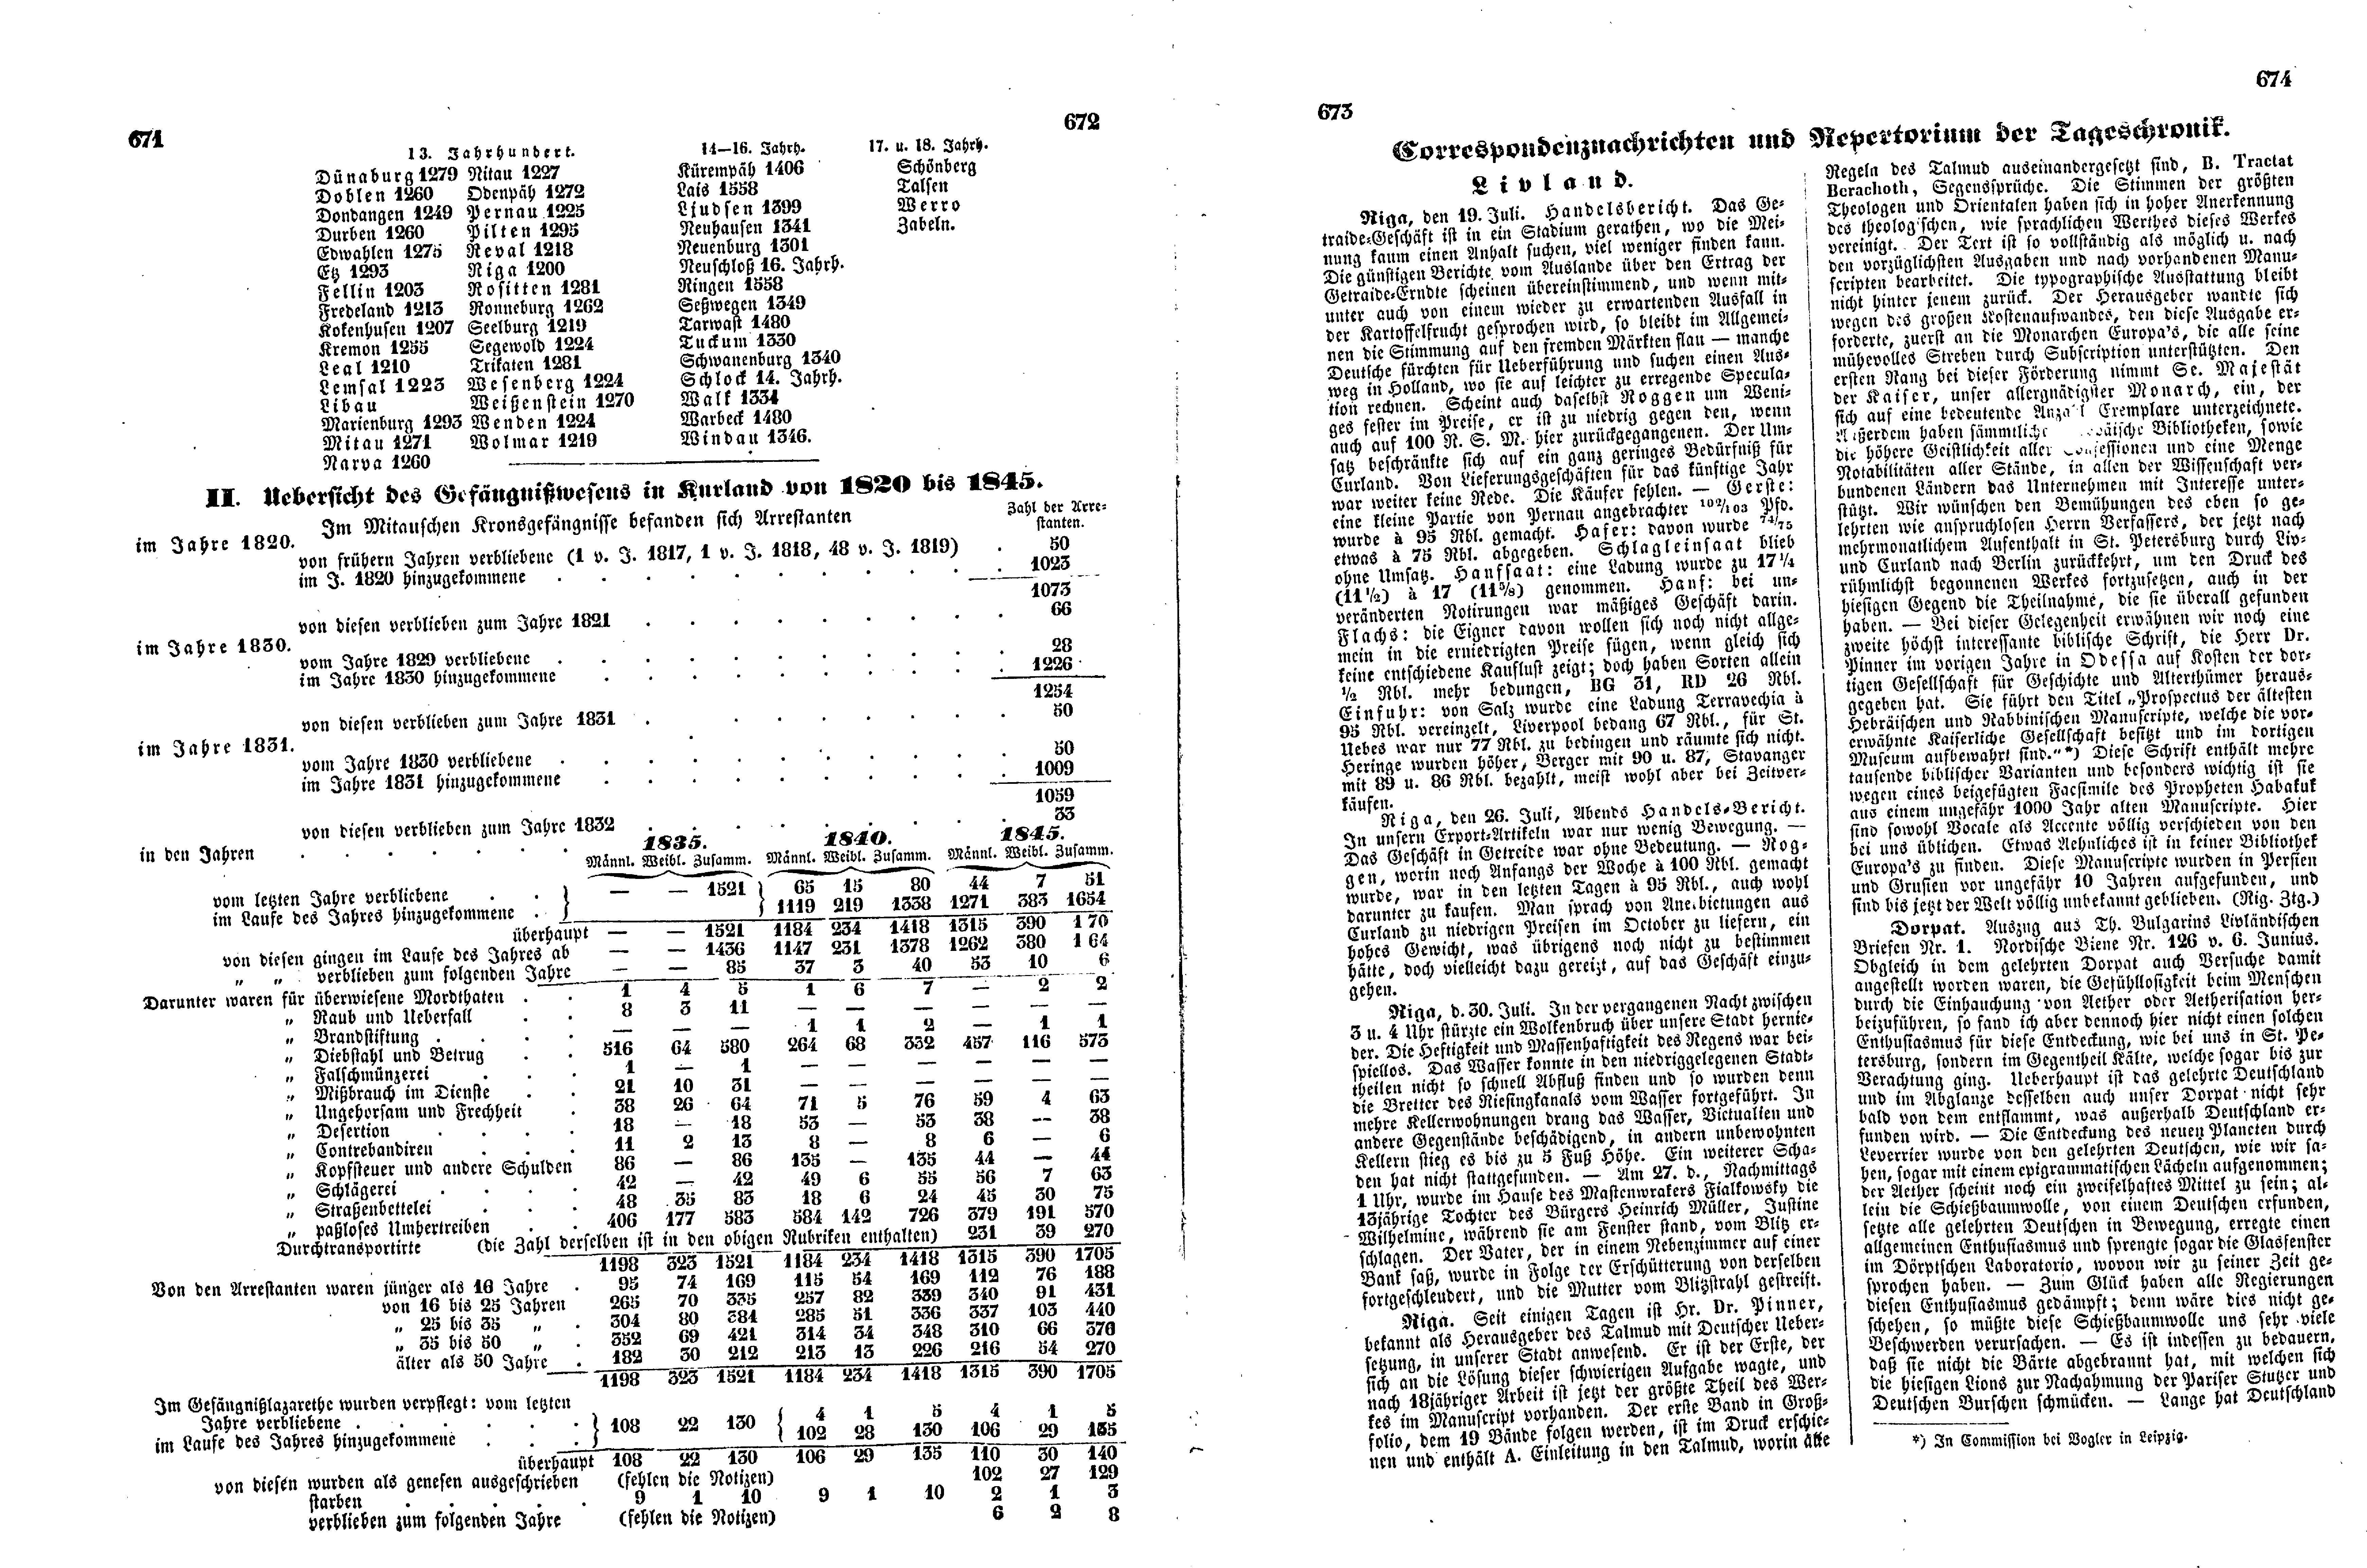 Das Inland [12] (1847) | 173. (671-674) Main body of text